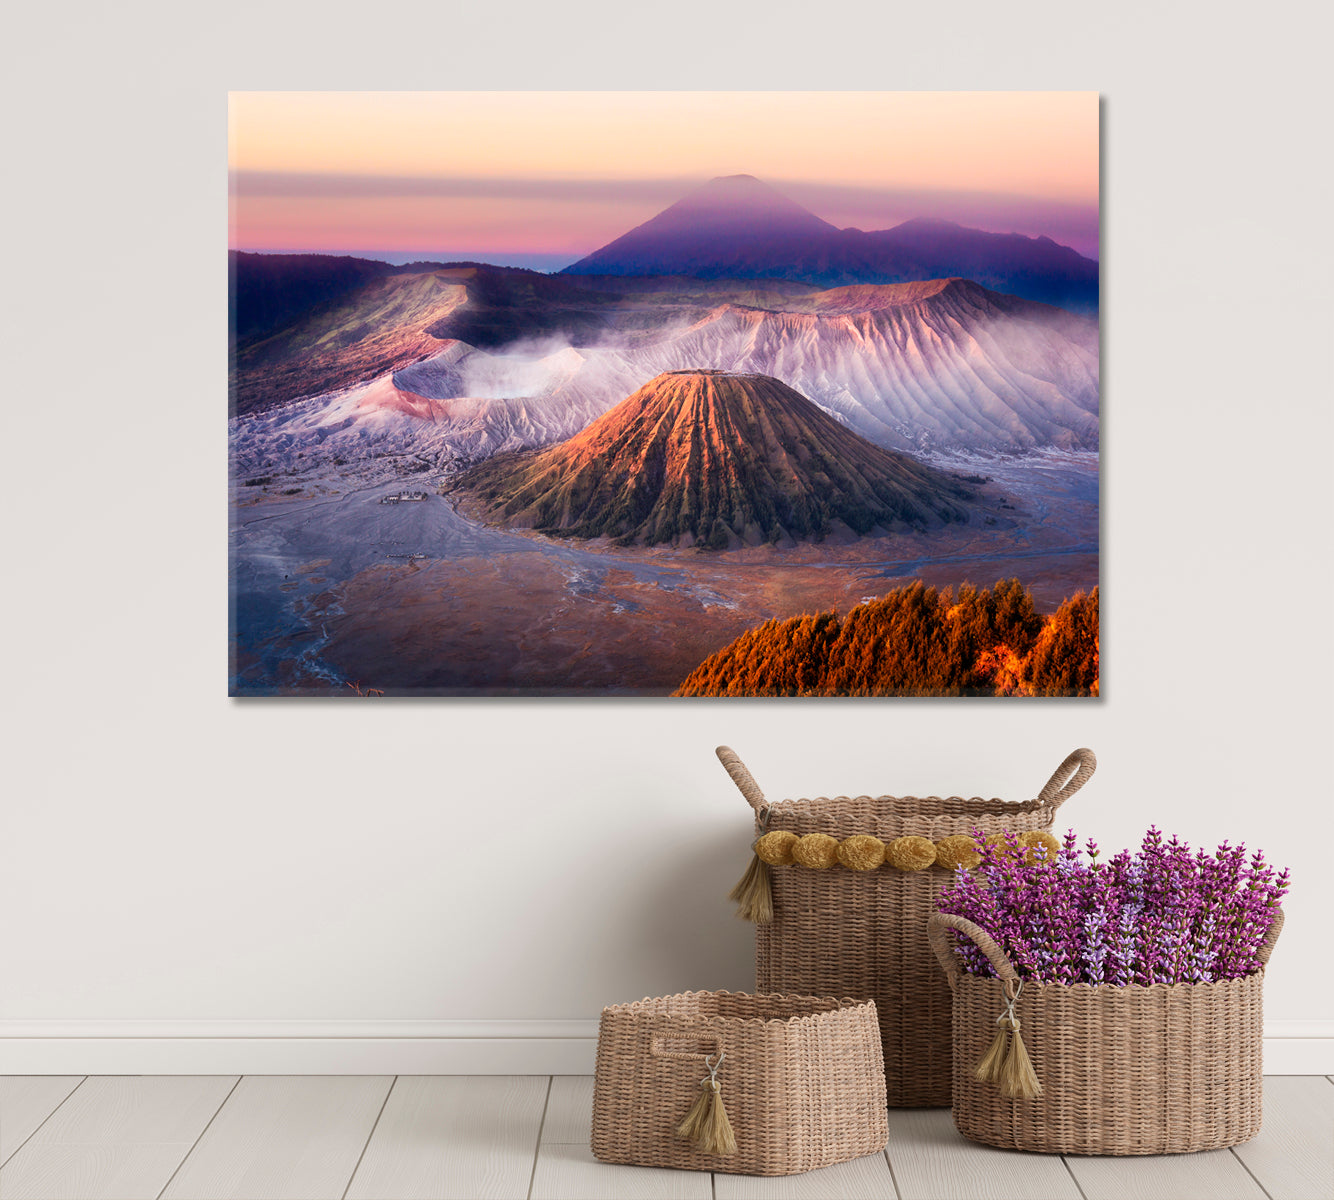 Java Mount Bromo Sunrise Twilight Sky Fog Nature Landscape Famous Landmarks Artwork Print Artesty 1 panel 24" x 16" 